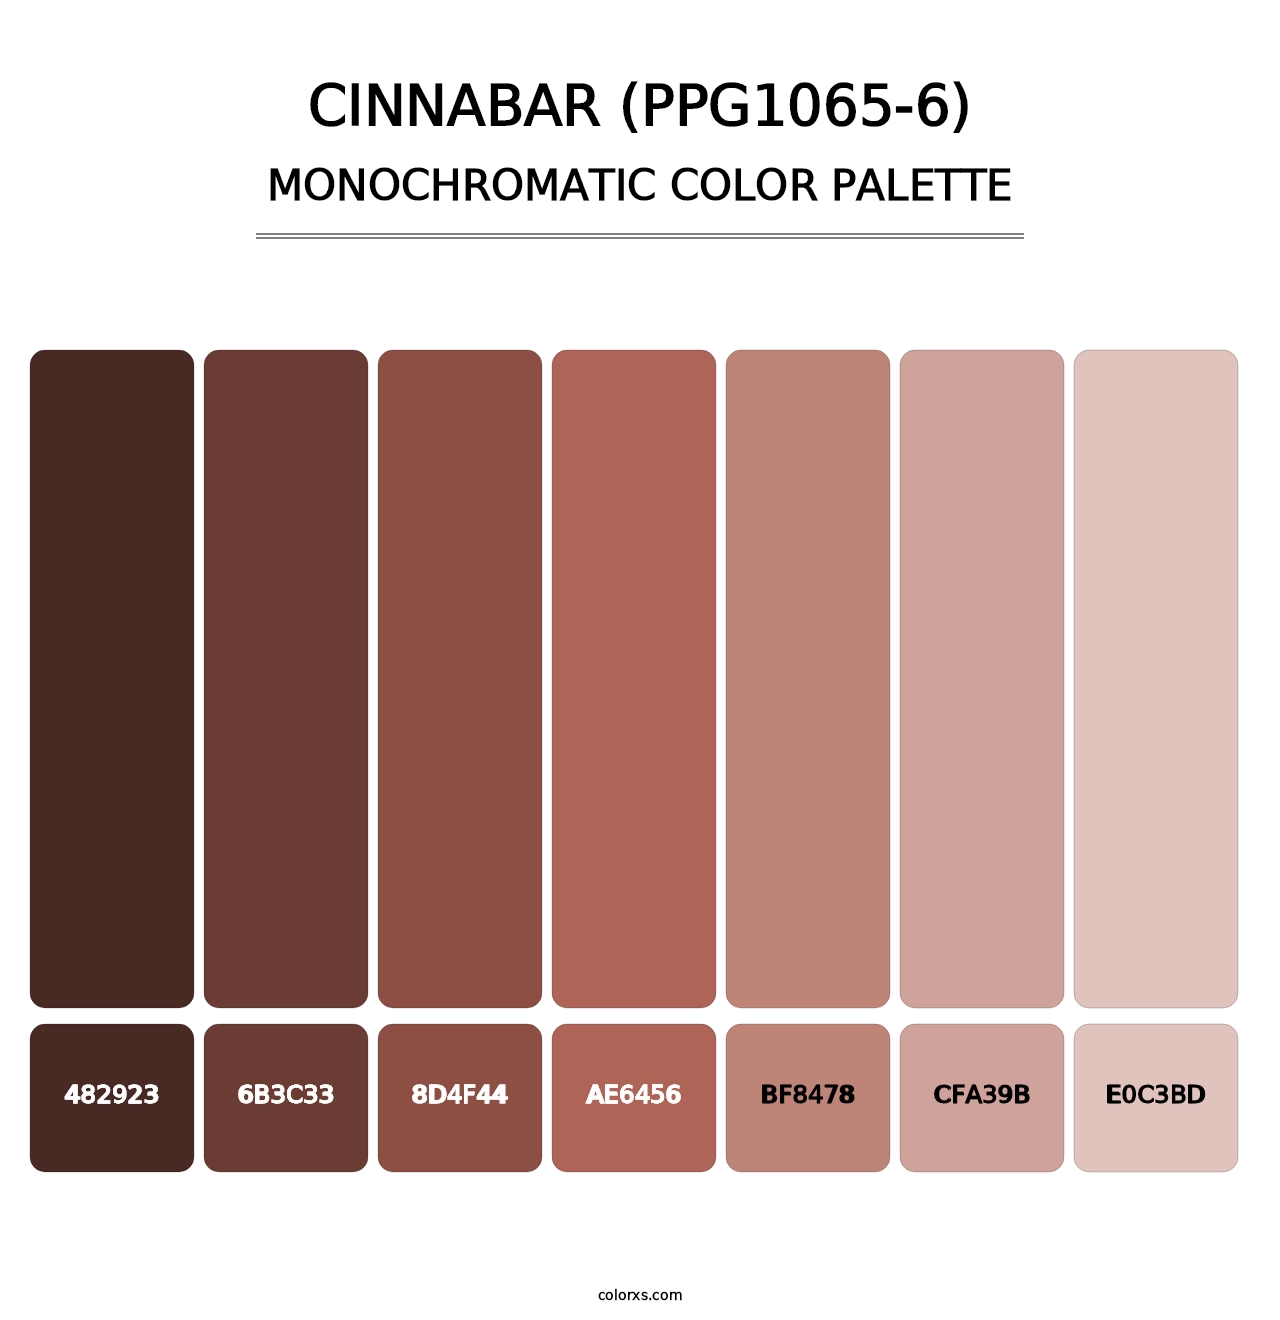 Cinnabar (PPG1065-6) - Monochromatic Color Palette